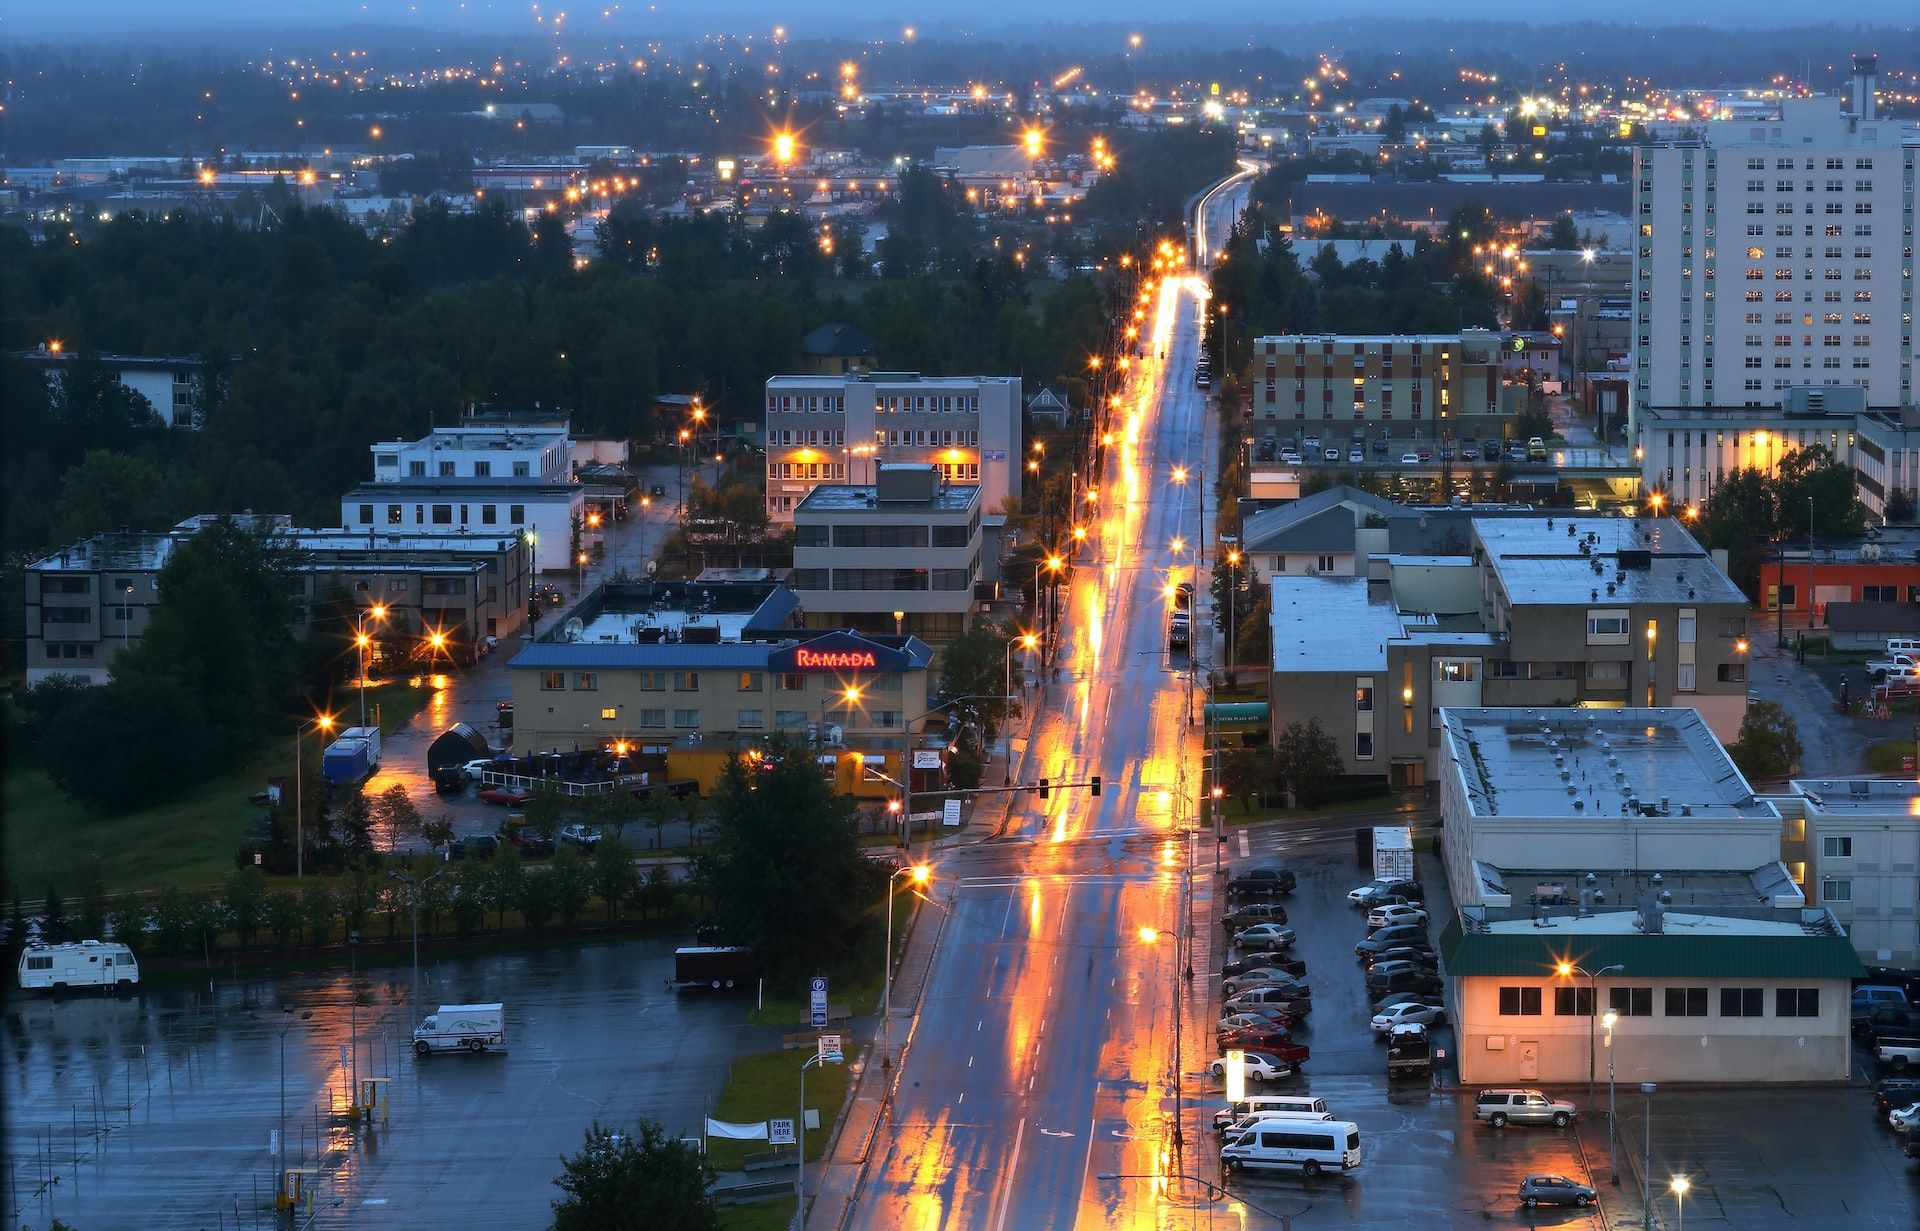 A dark and rainy day in Anchorage, Alaska, USA